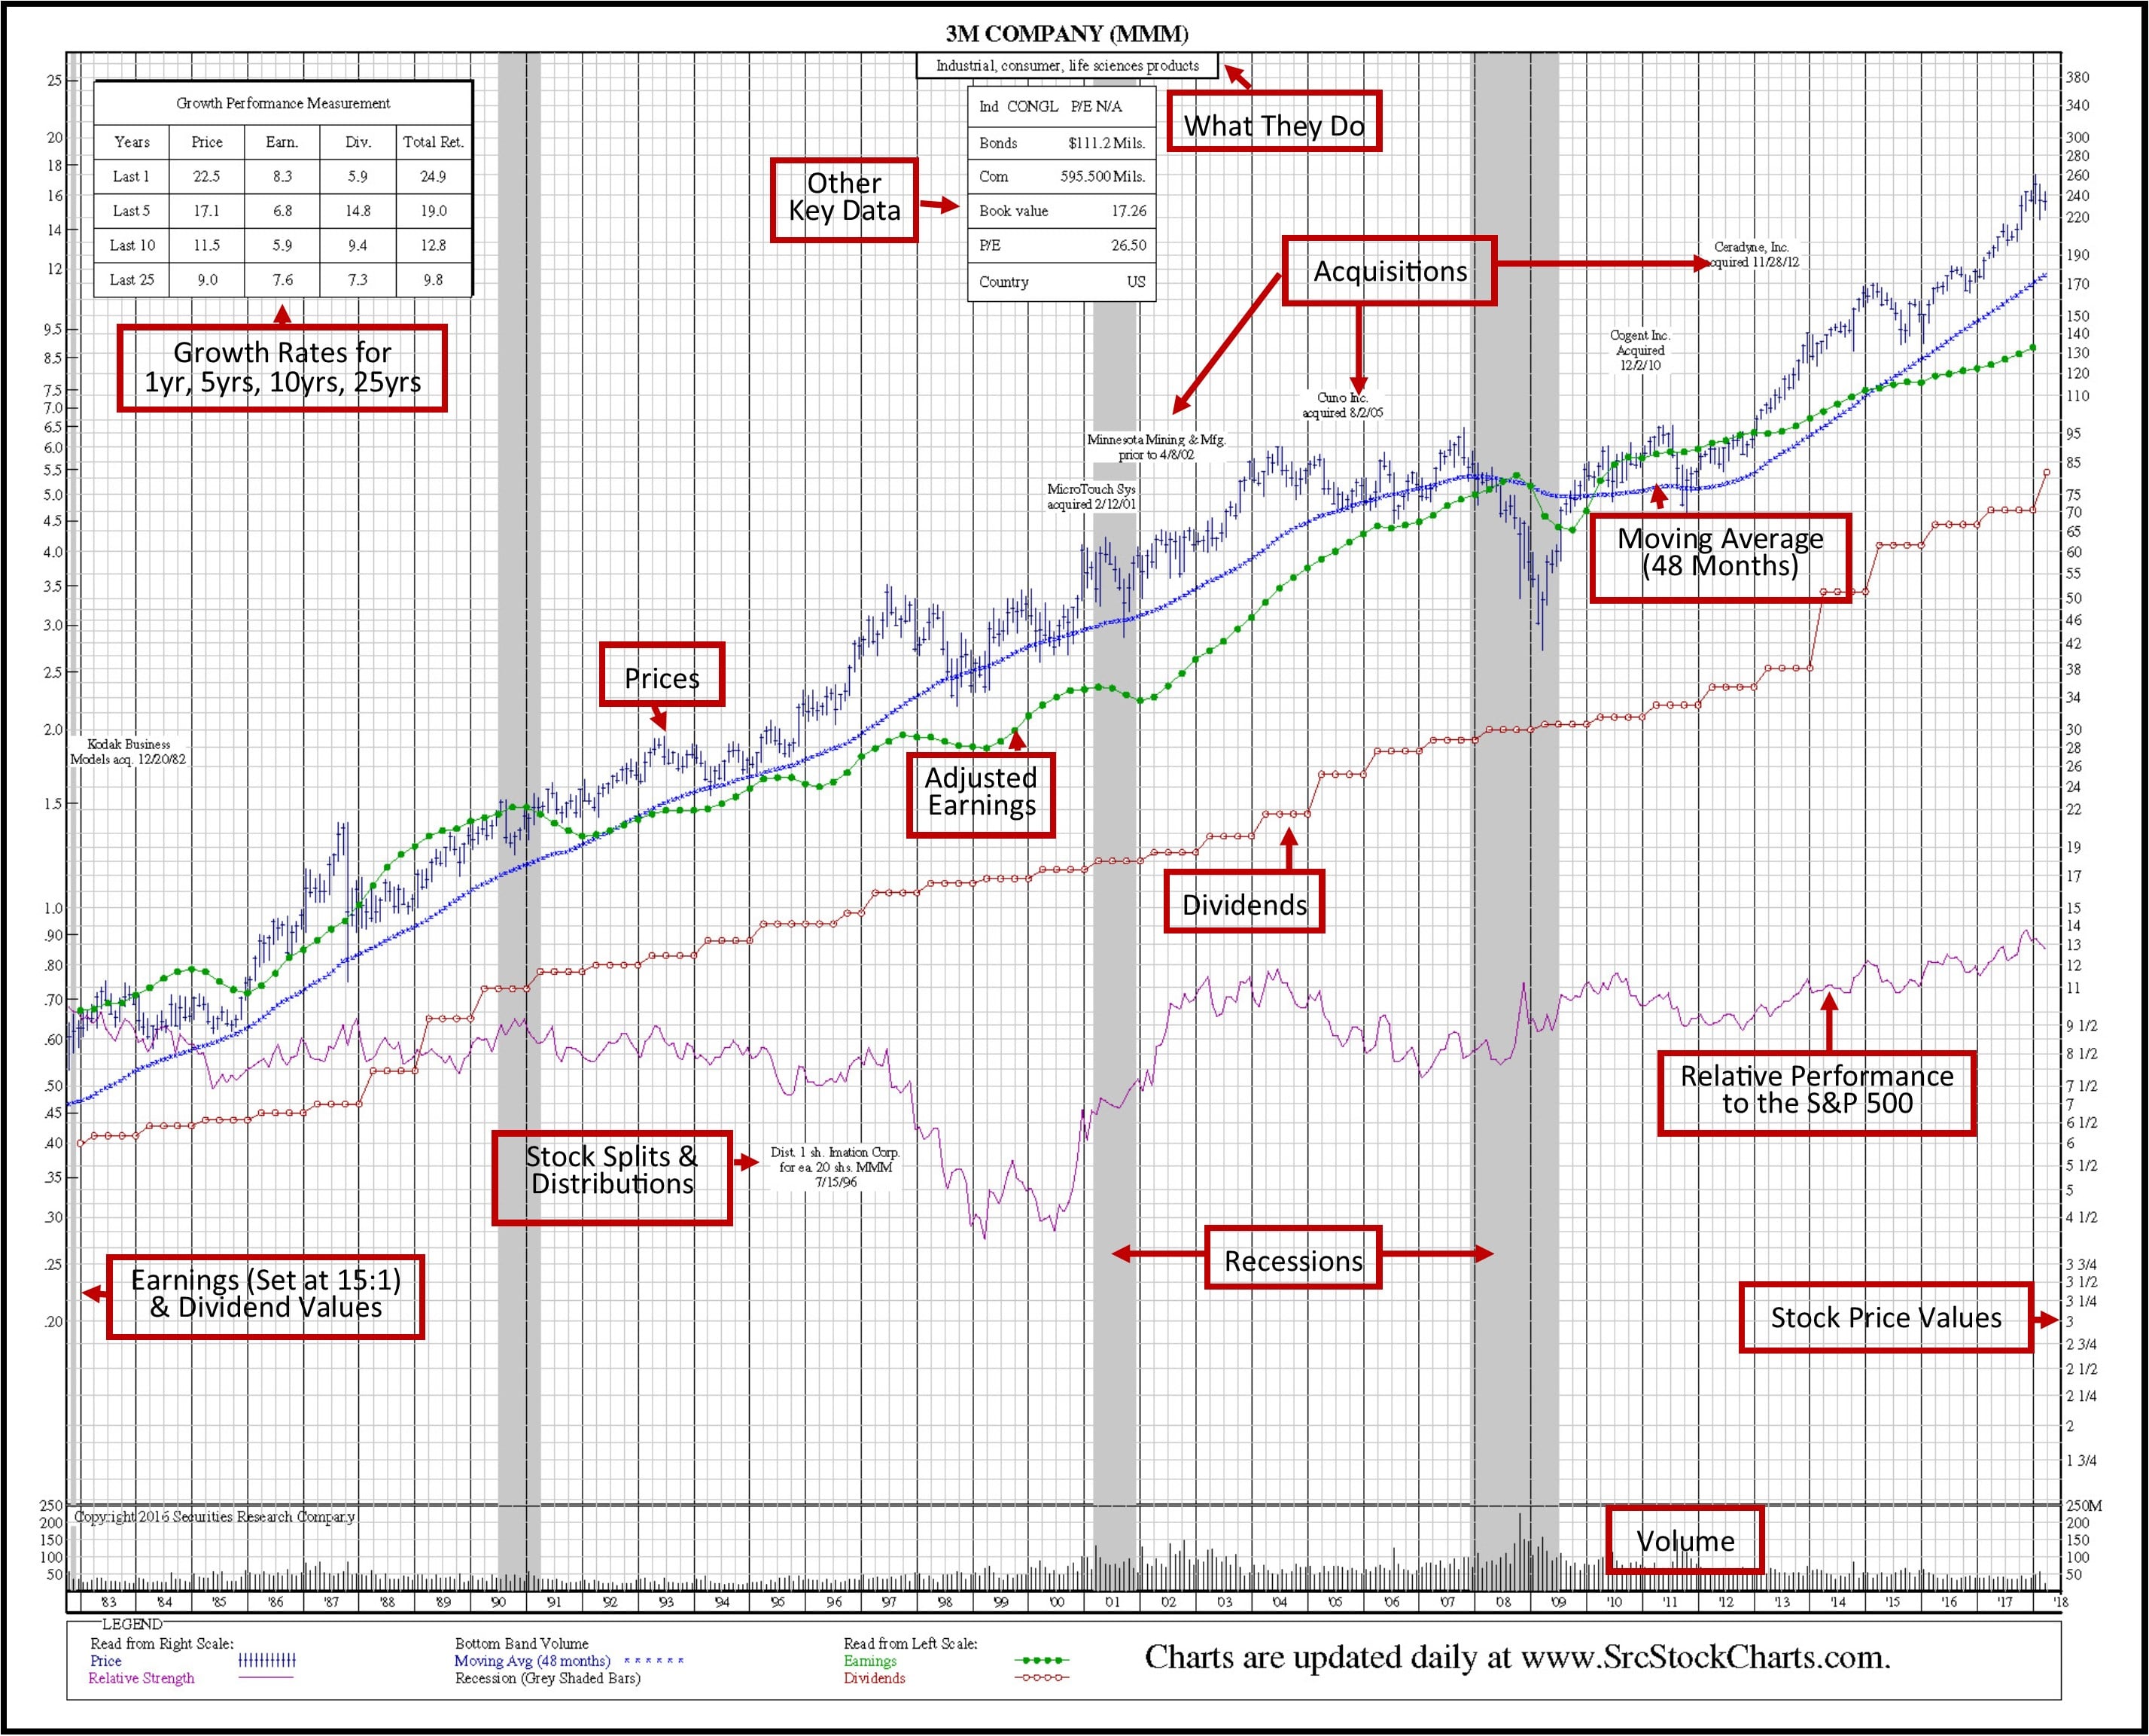 SRC Green Book 35-Year Historical Stock Chart